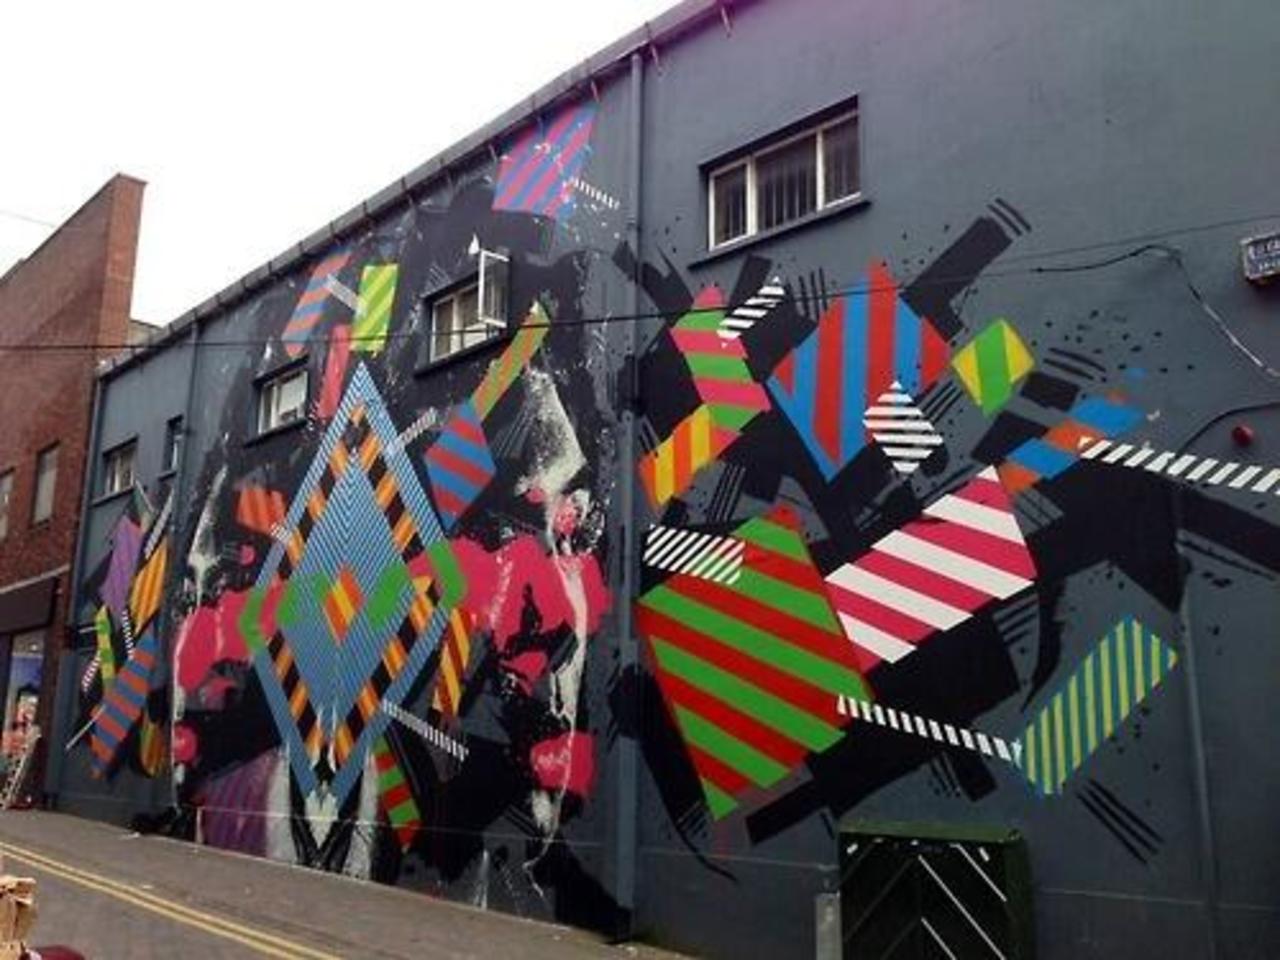 "Big and bold! New work by Maser in #Ireland" http://buff.ly/1jfeqce via @globalstreetart #art #streetart #graffiti http://t.co/7vnYapzuIO